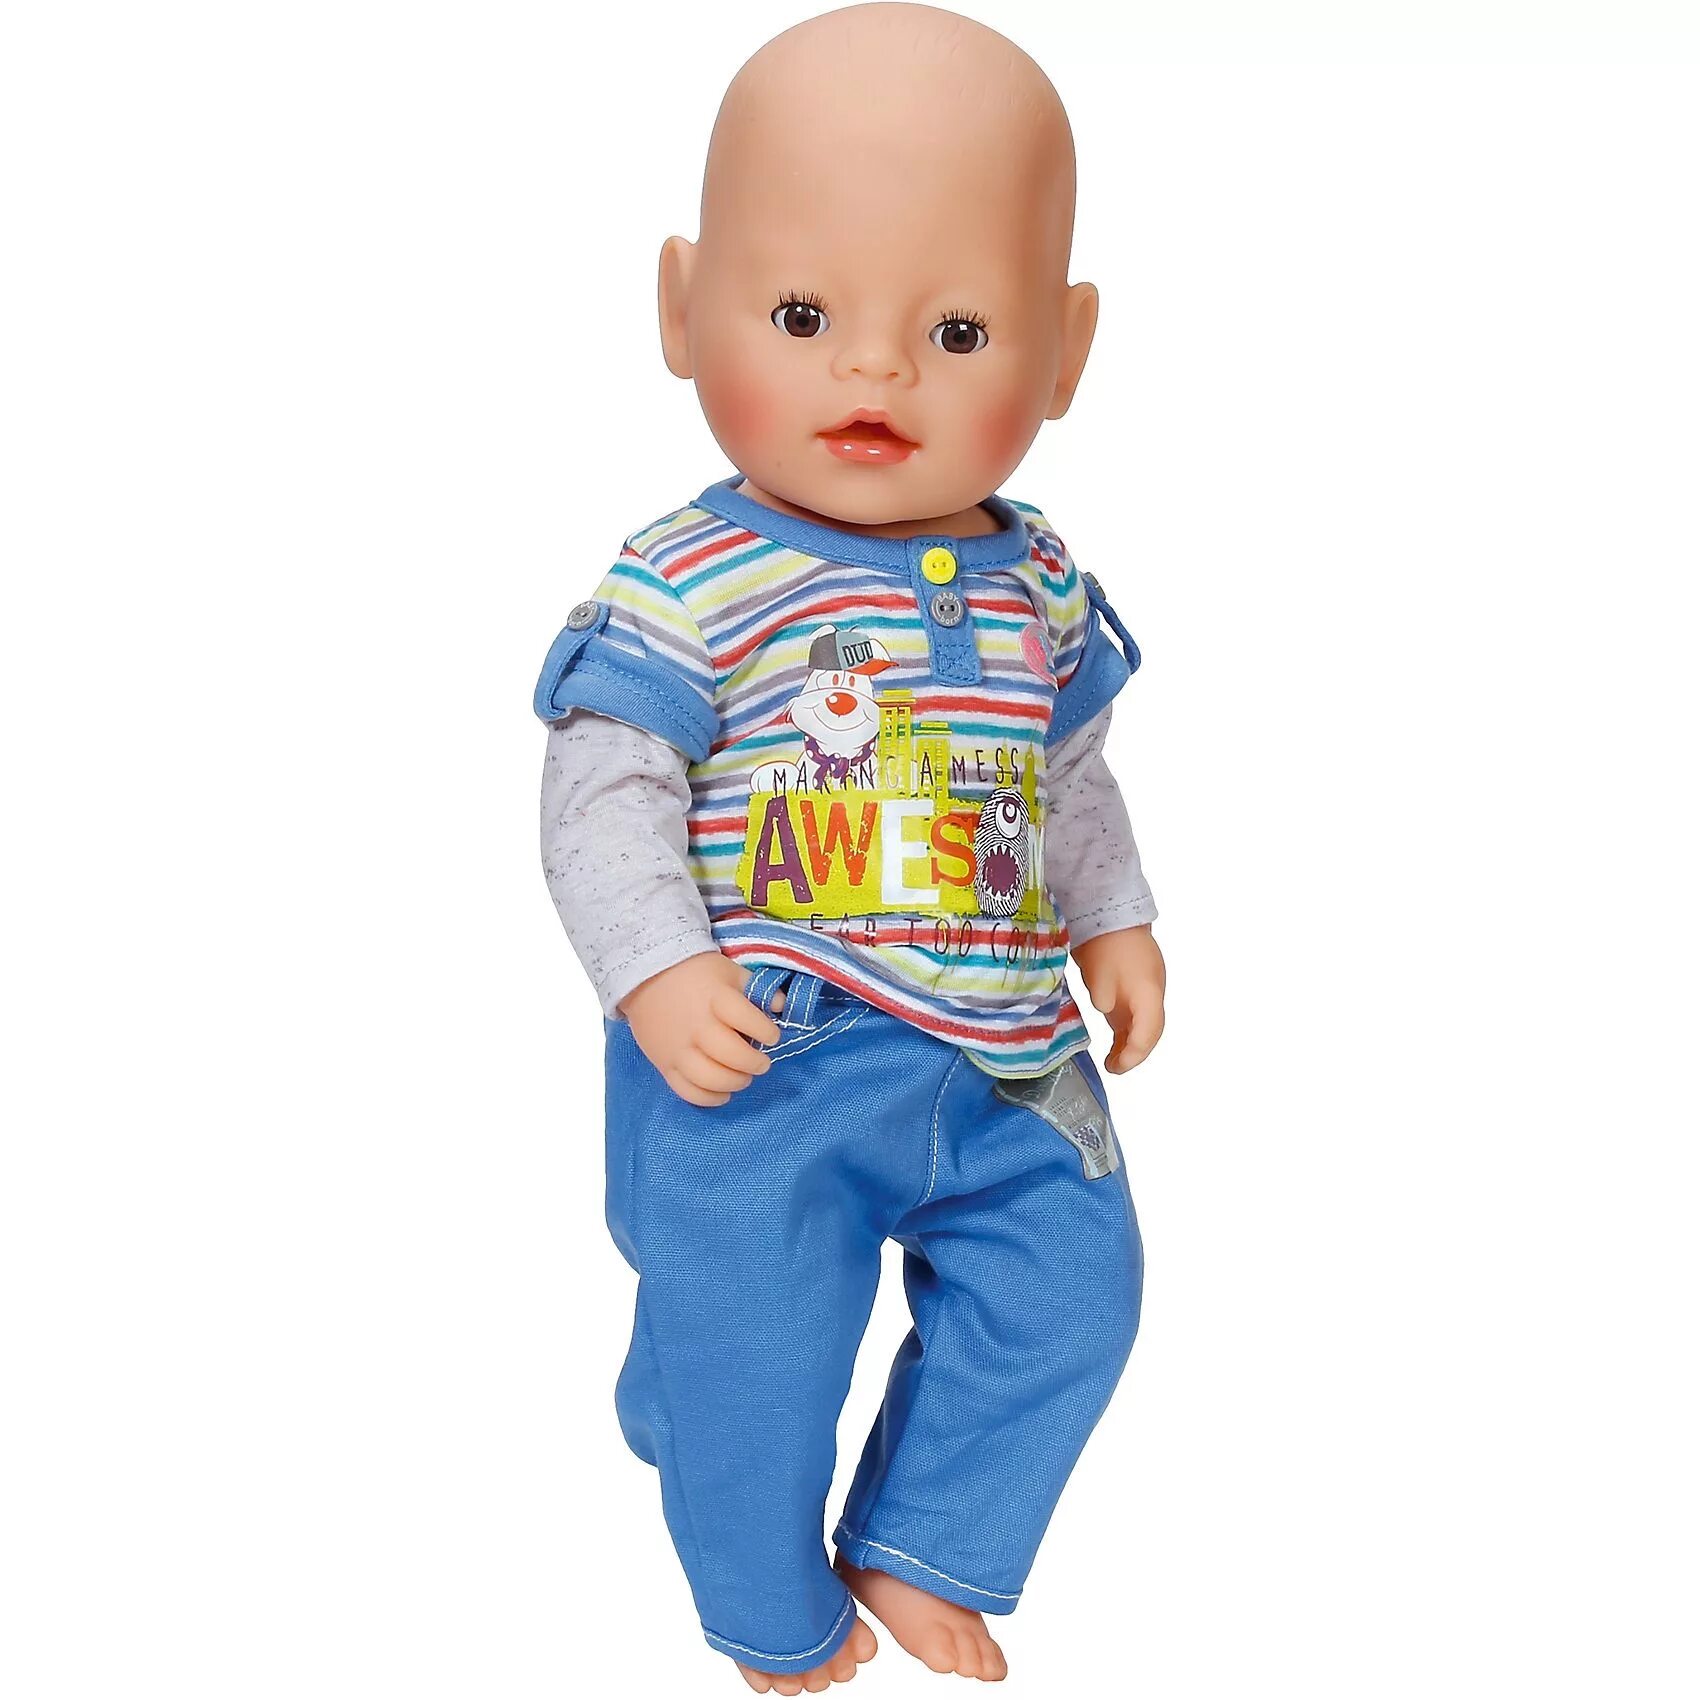 Пупс бэби Борн мальчик. Zapf Creation комплект одежды для мальчика Baby born 822197. Одежда для кукол Беби Борн для мальчиков. Костюм для куклы Беби Борн мальчик. Кукла пупс одежда для кукол